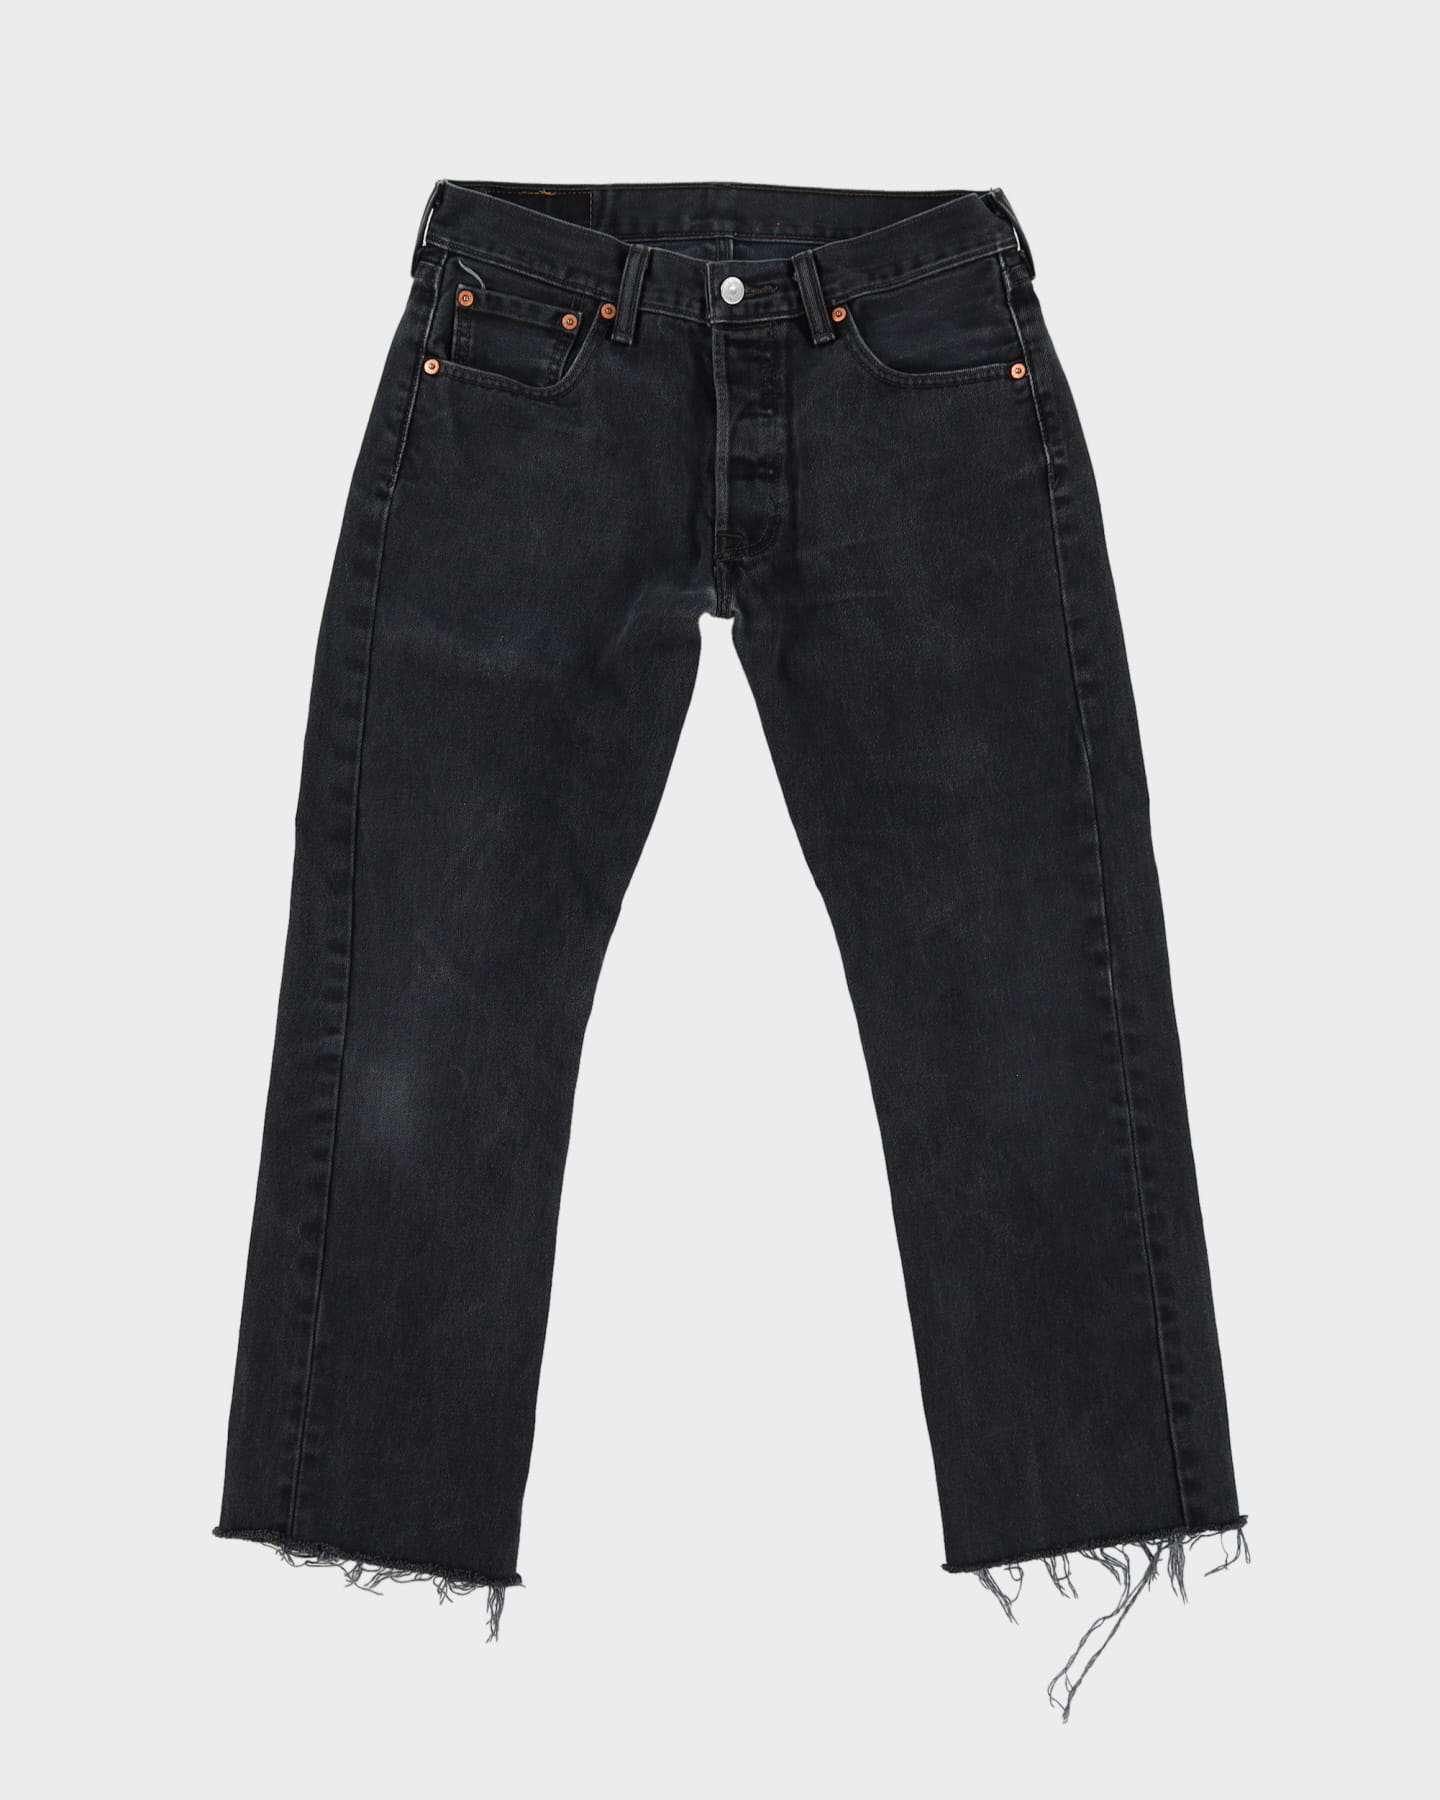 Vintage 90s Levi's 501 Dark Wash Black Jeans - W30 L26